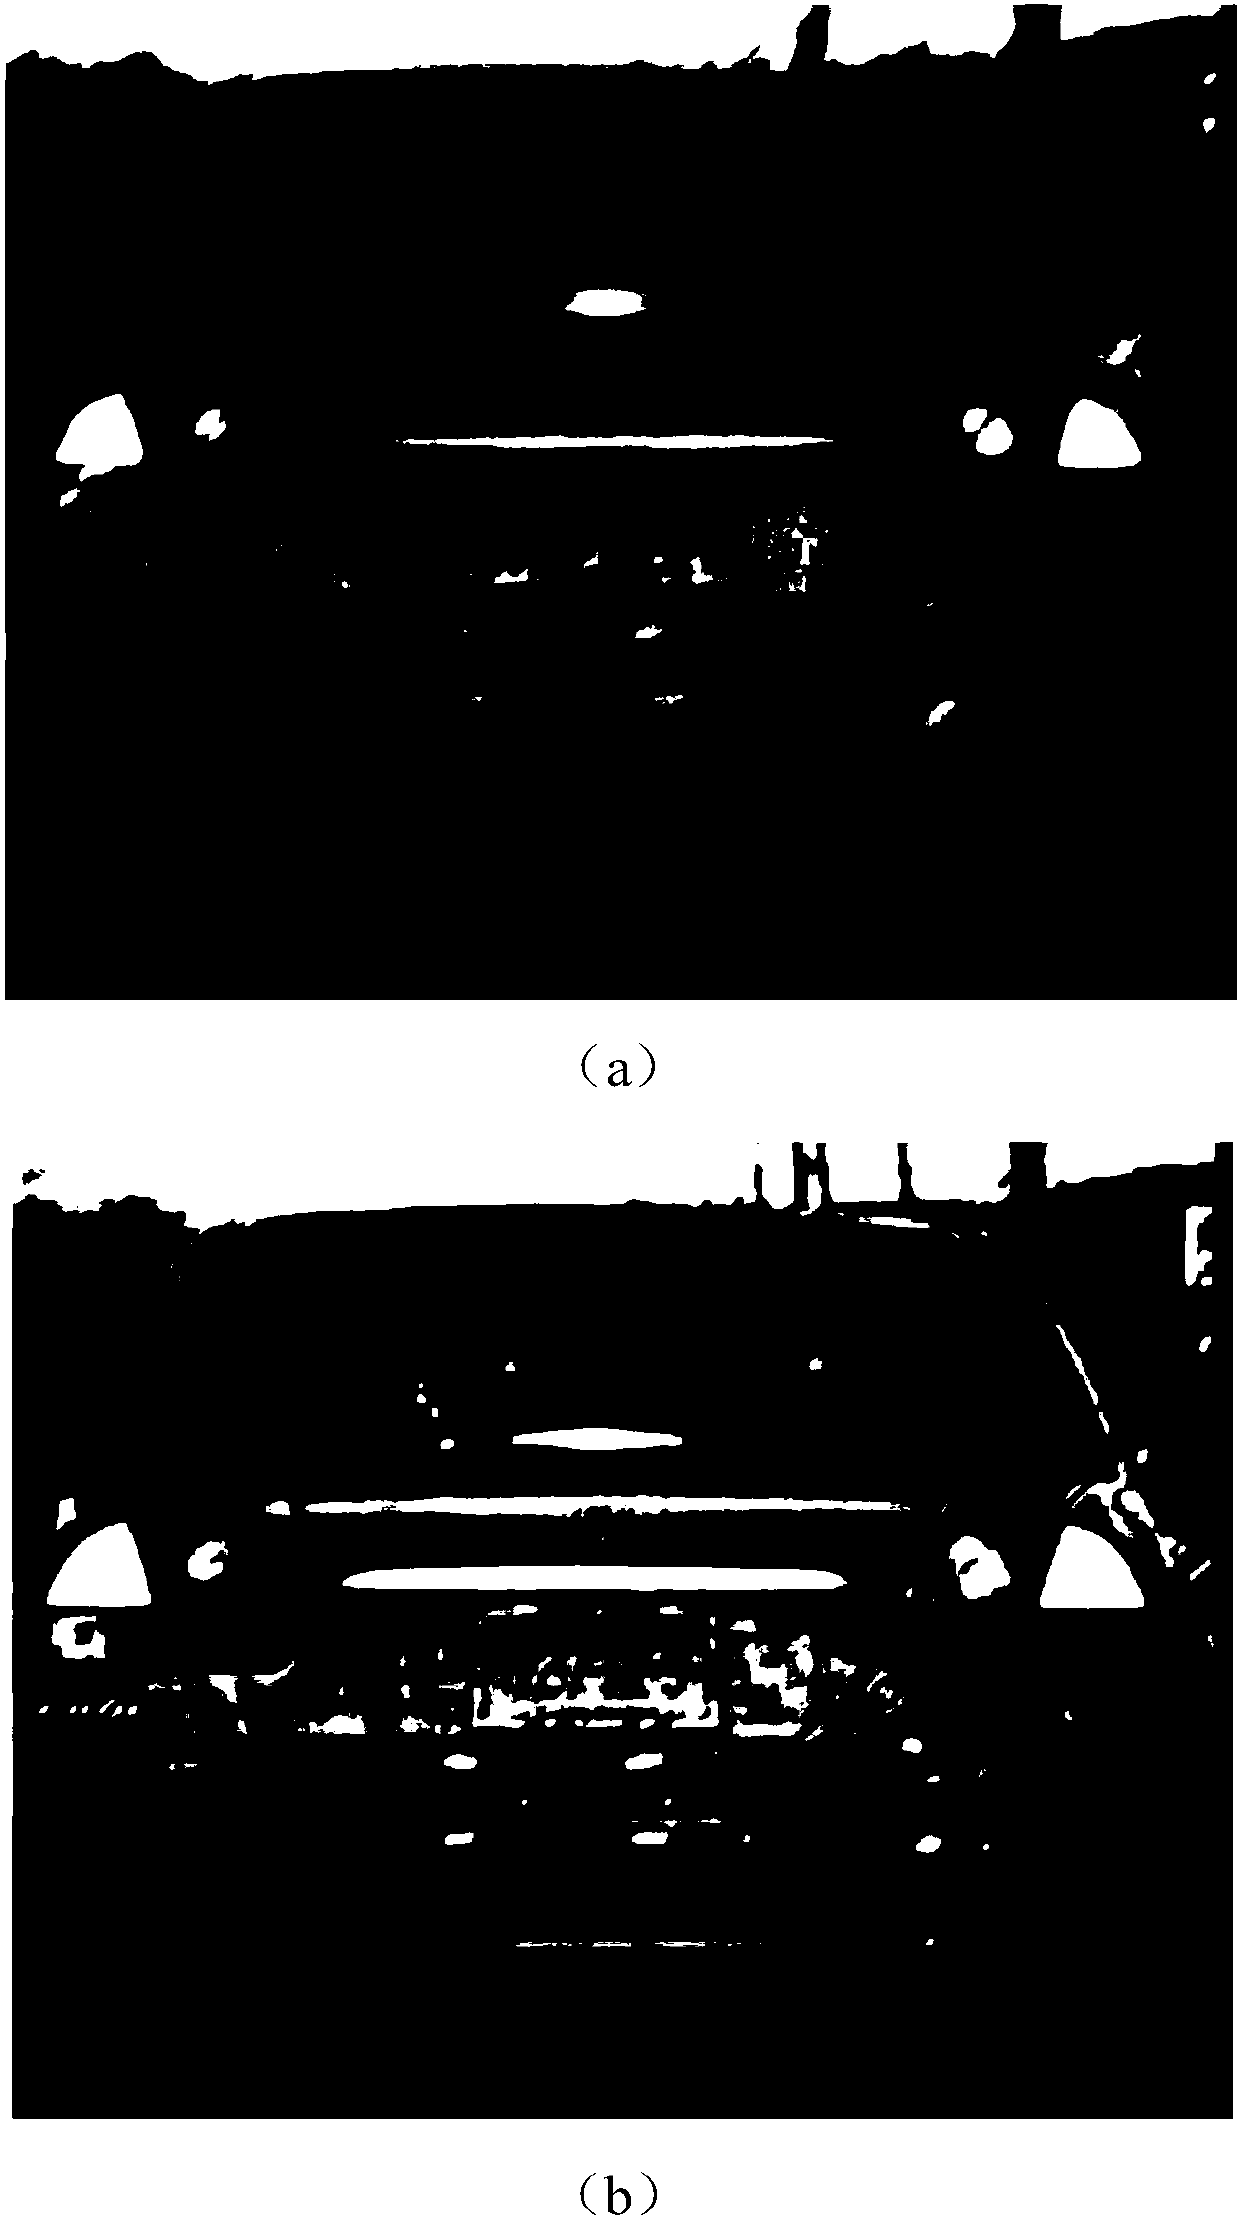 A method for blind motion blur removal of natural images based on l0 regularization